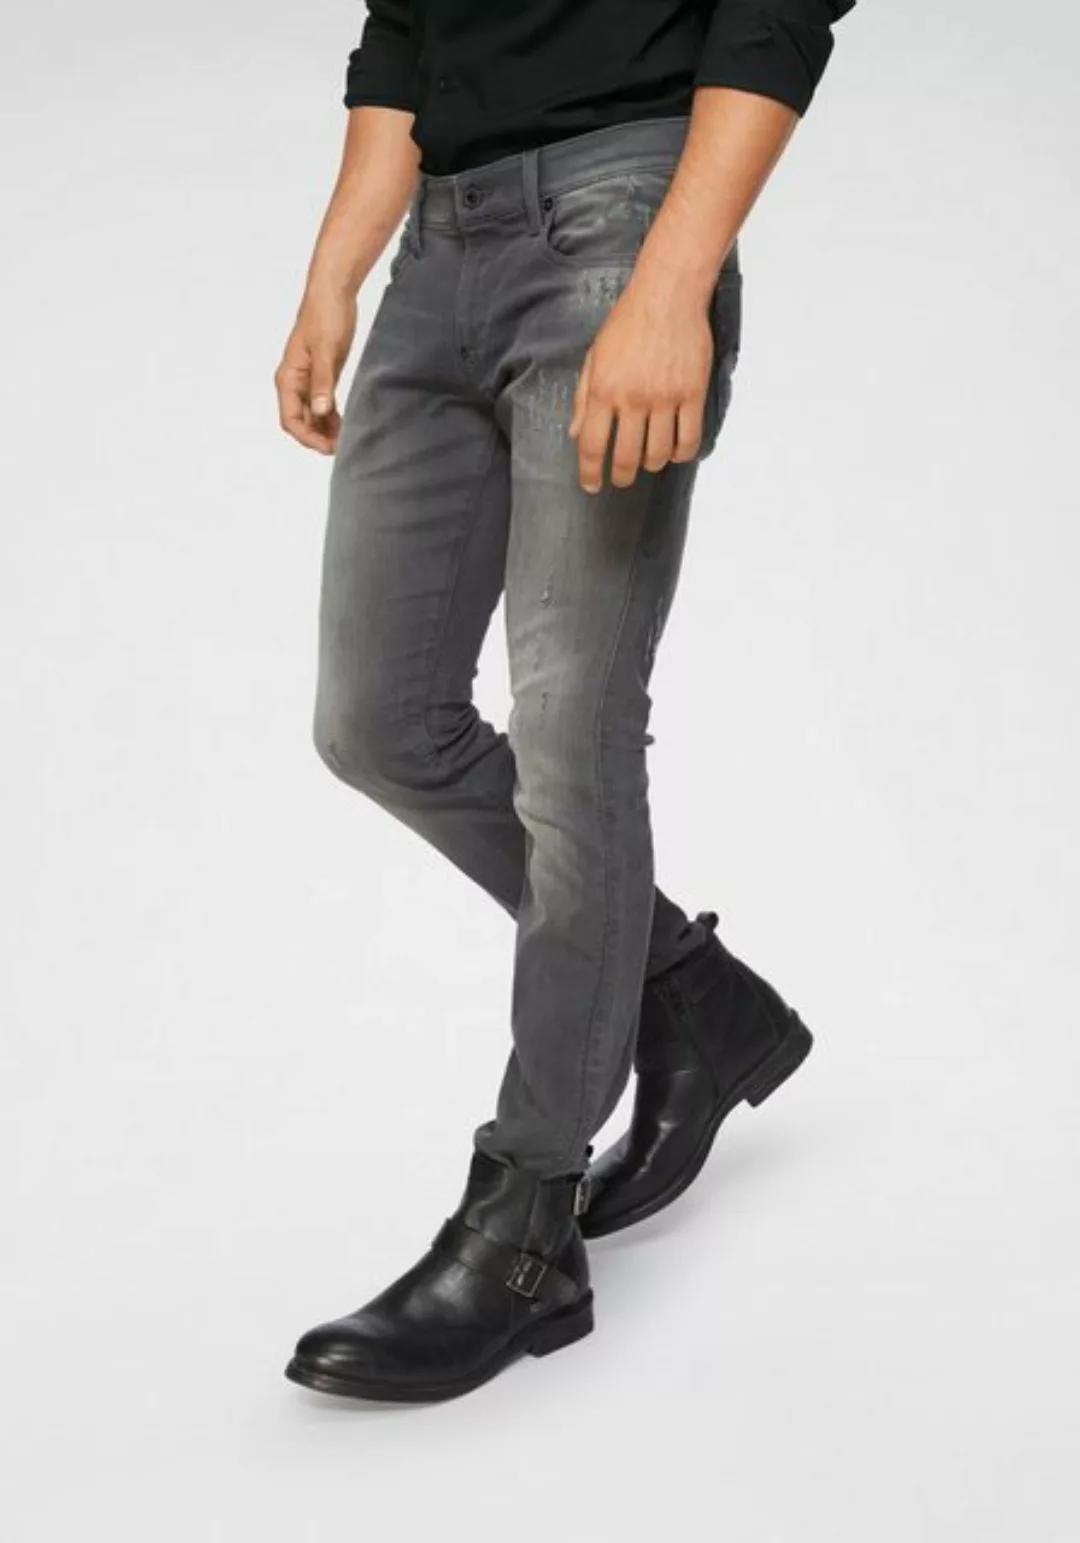 G-star Revend Skinny Jeans 38 Light Aged Destroy günstig online kaufen